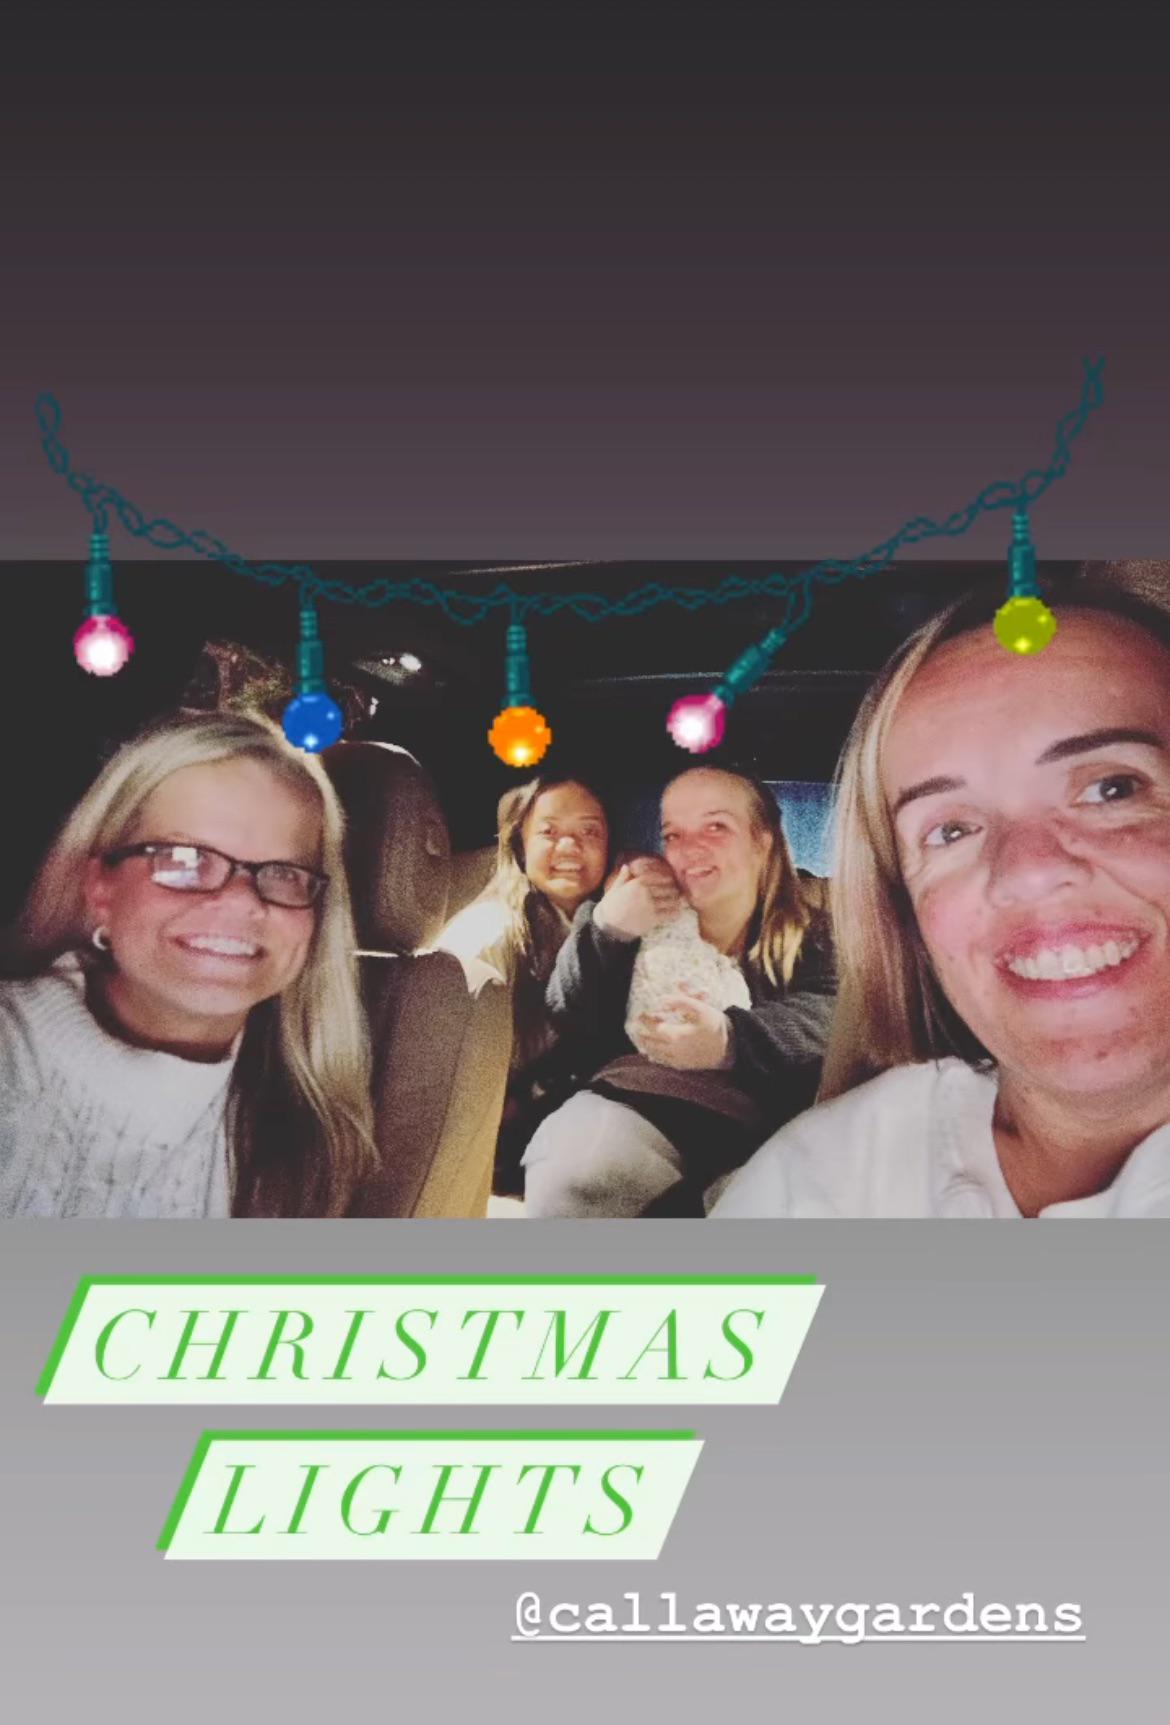 Liz and Leighton enjoyed the Christmas light show with their family